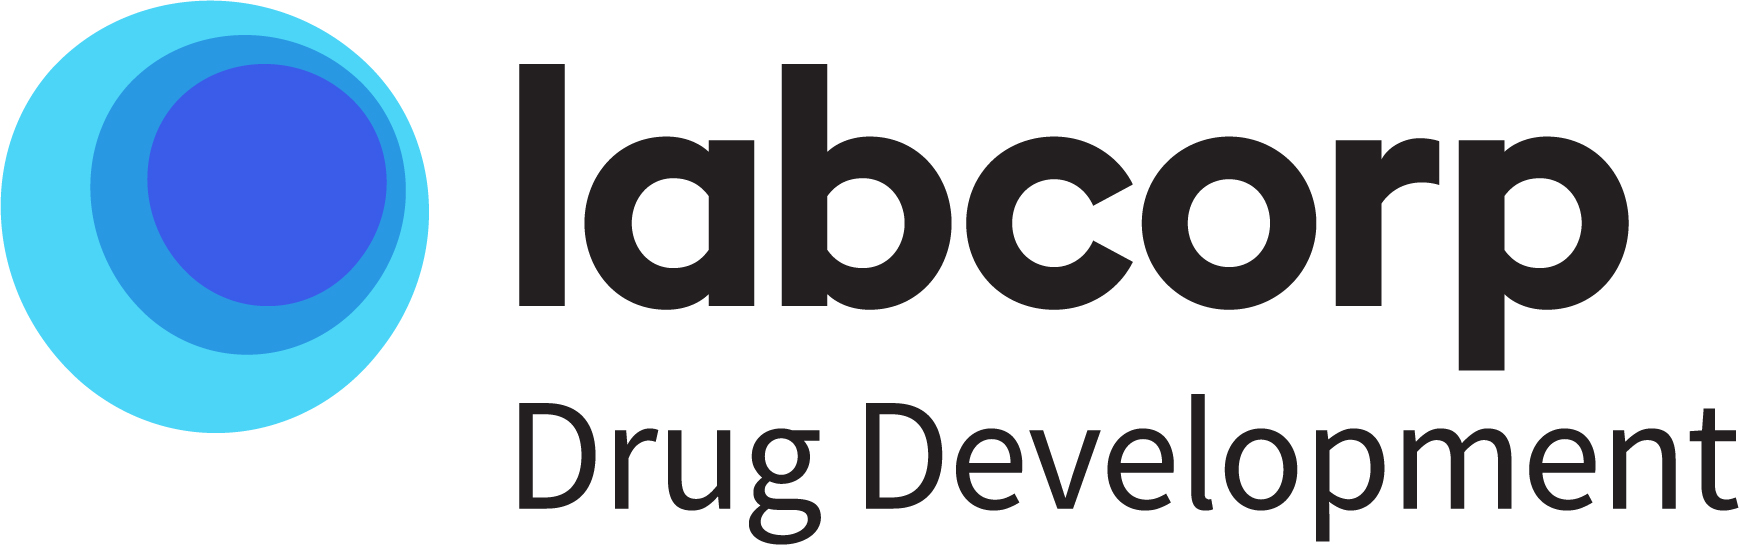 company logo with text 'labcorp drug development'